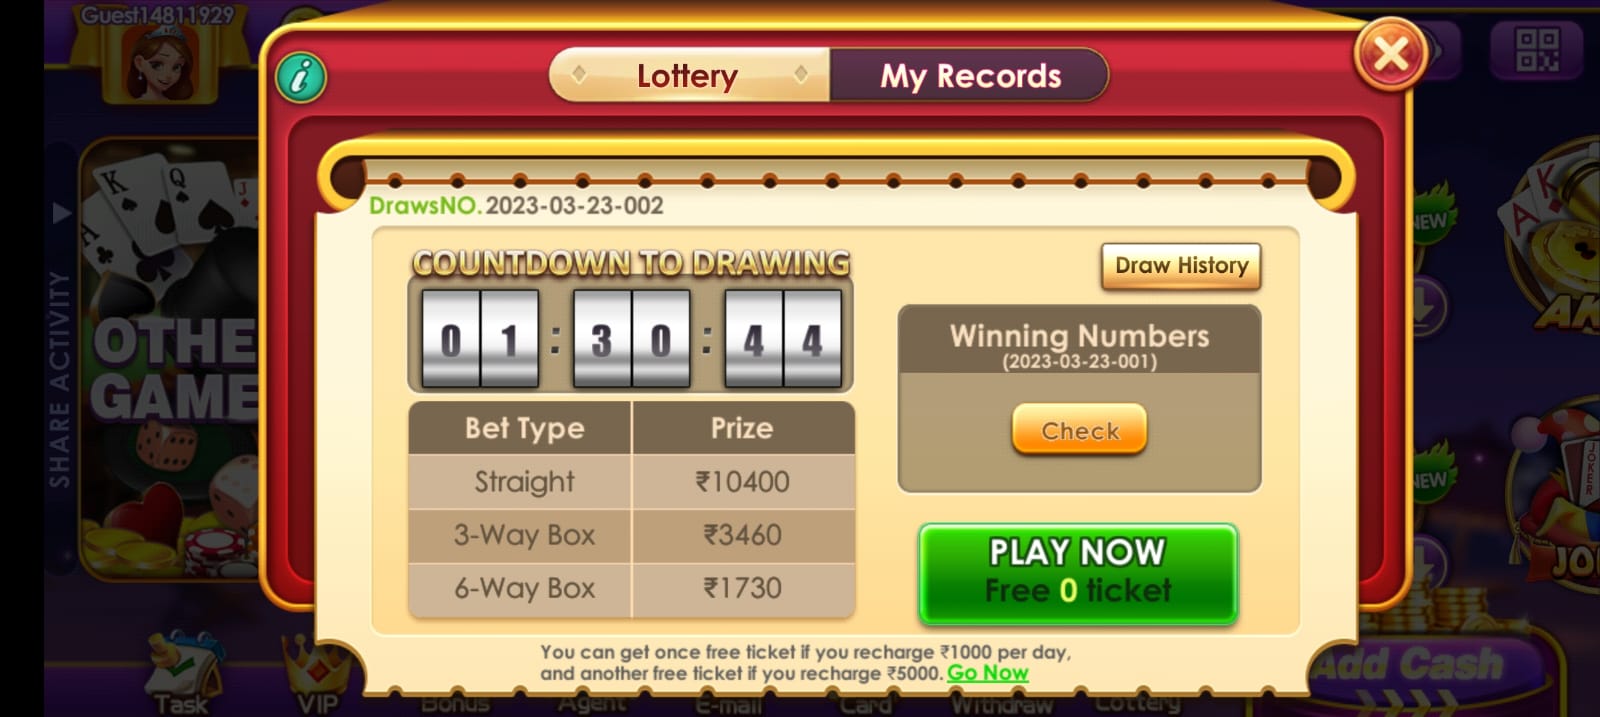 Lottery Option In Mega Slot Application